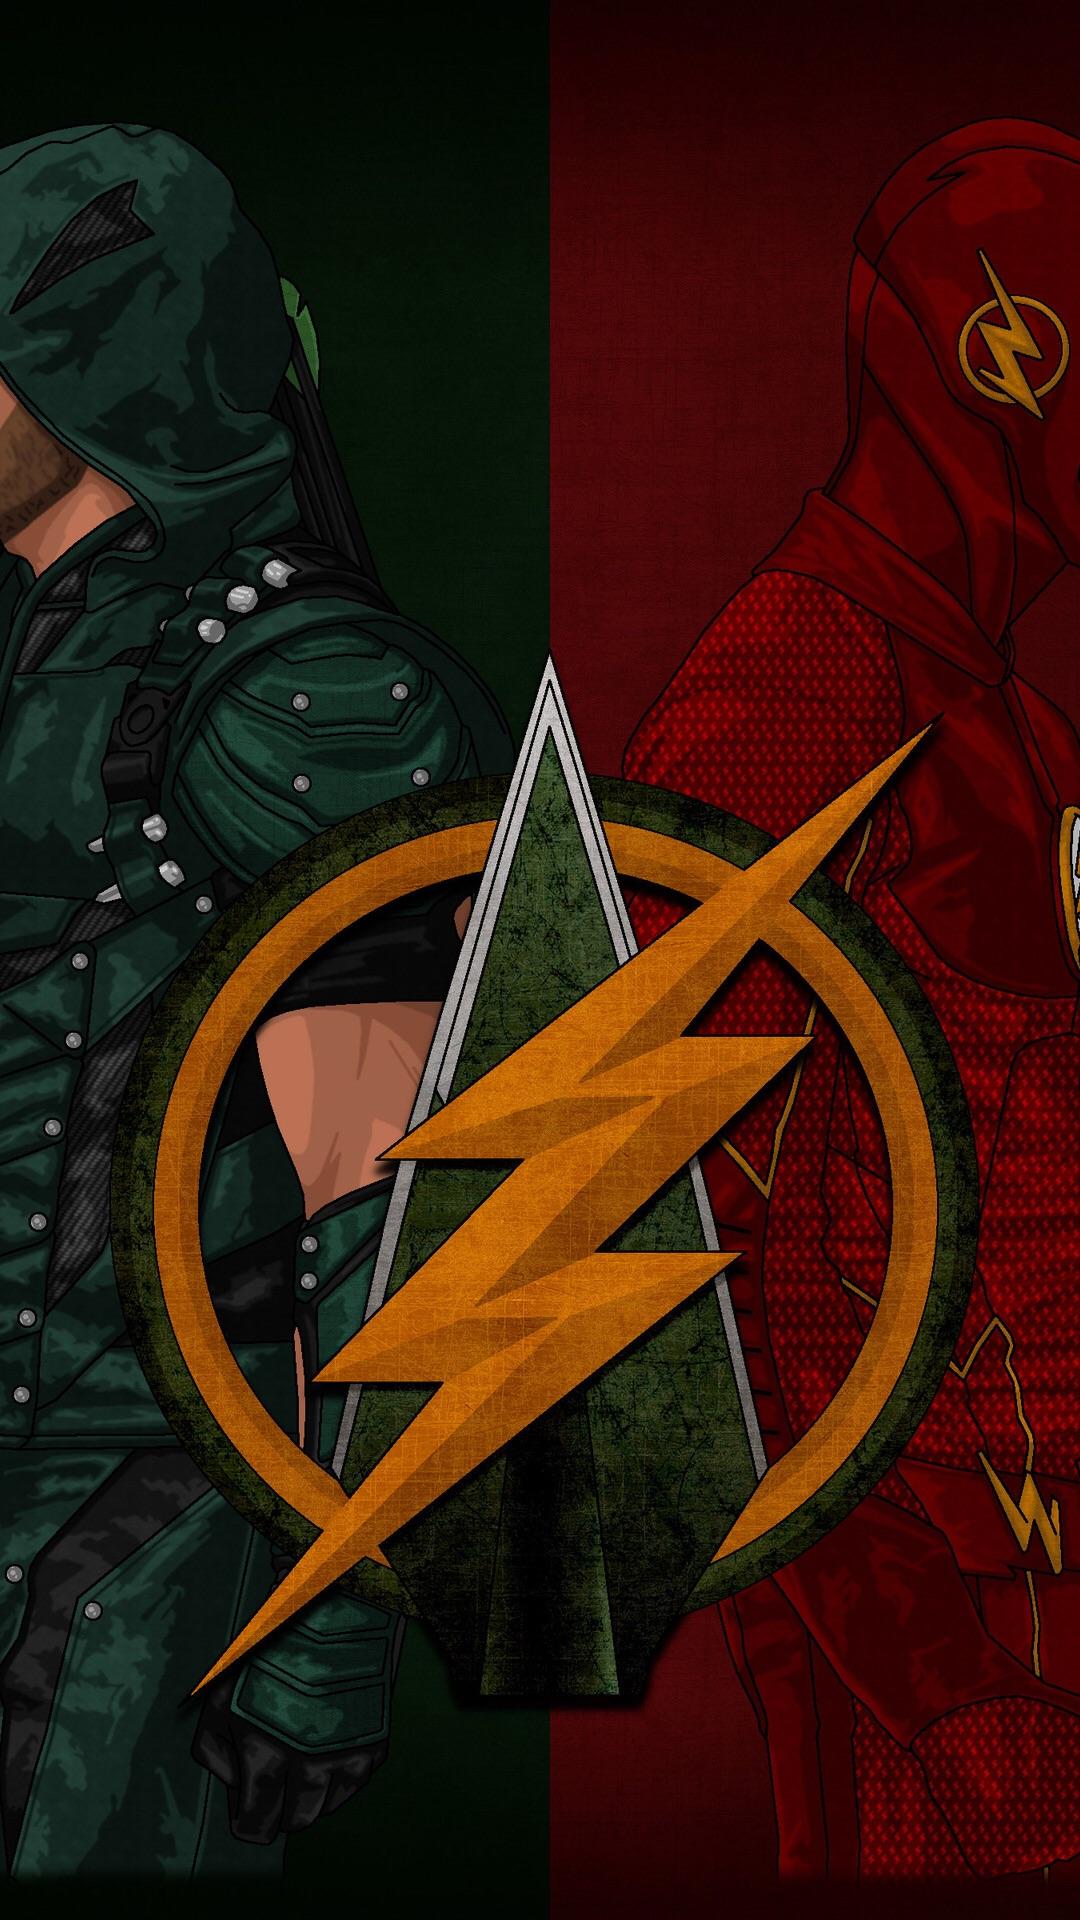 Green Arrow Flash CW Wallpaper